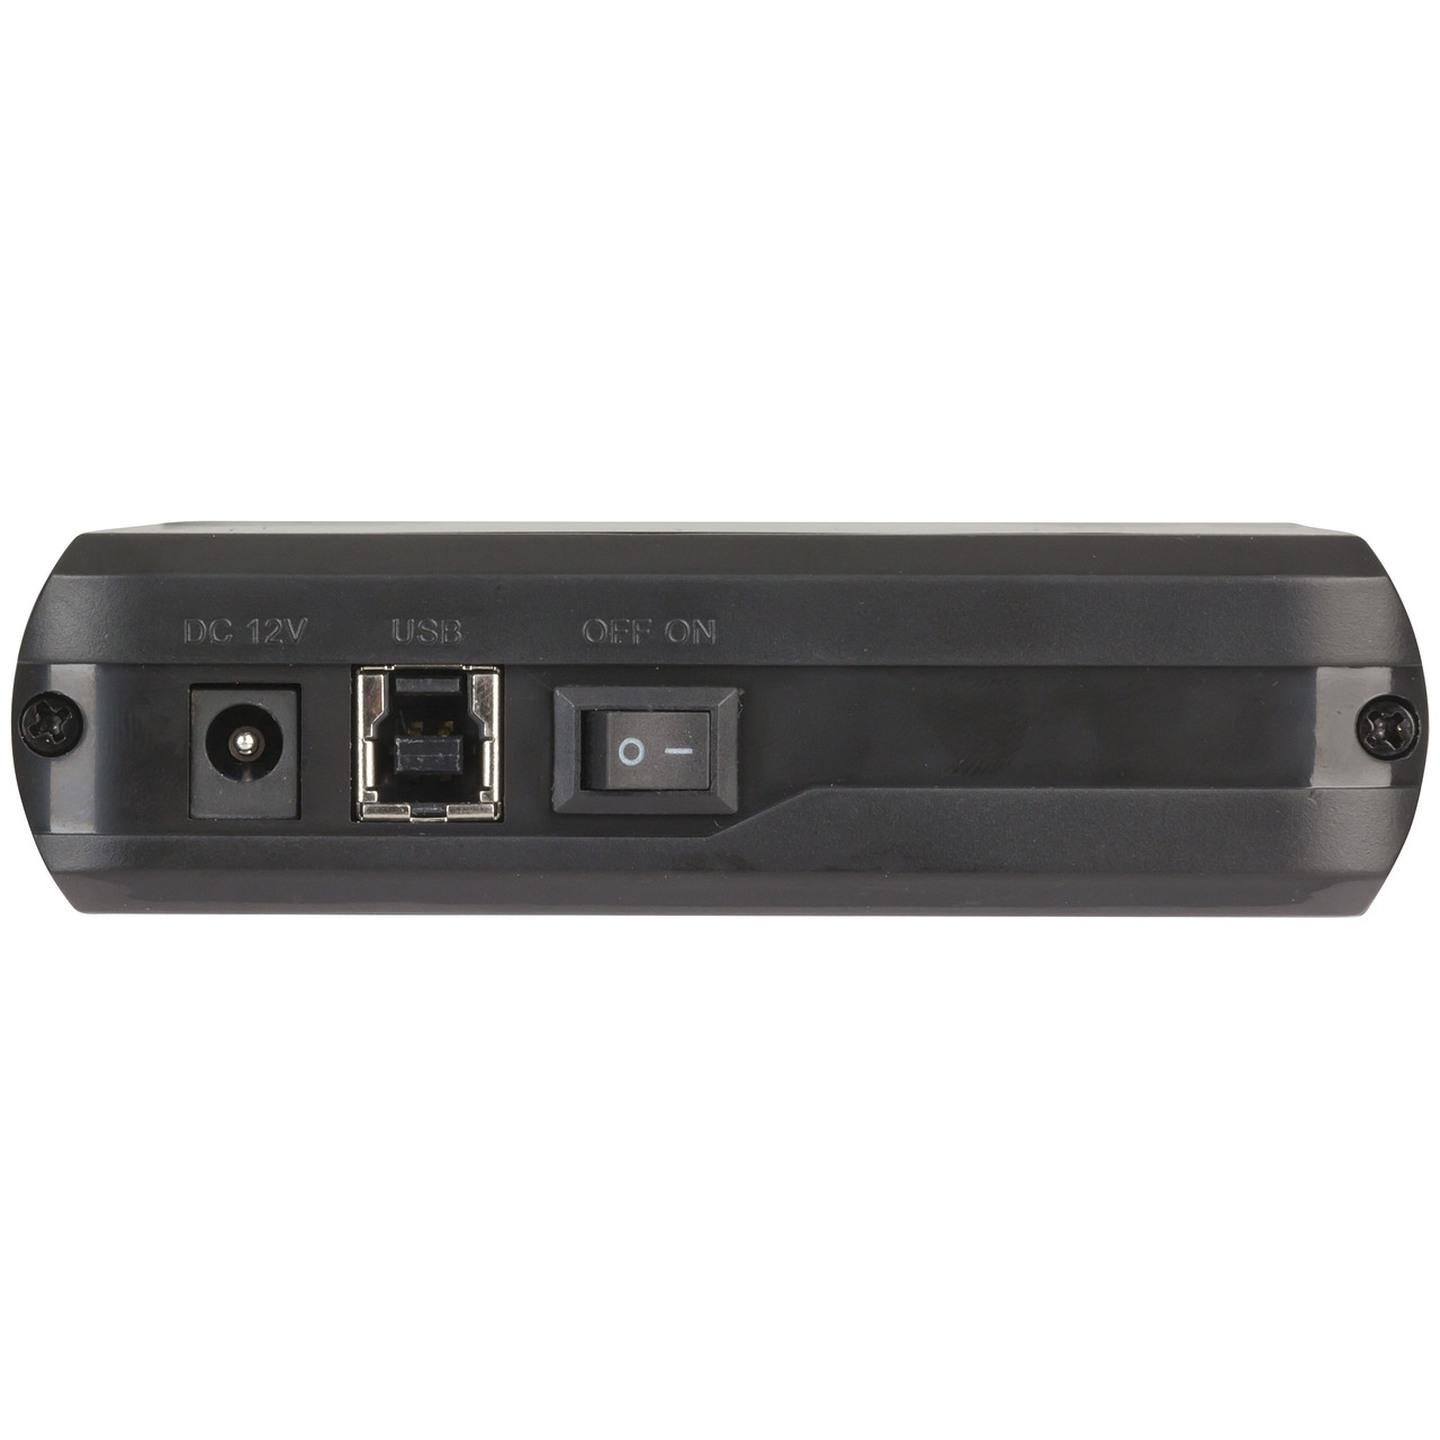 3.5 SATA HDD Enclosure - USB3.0